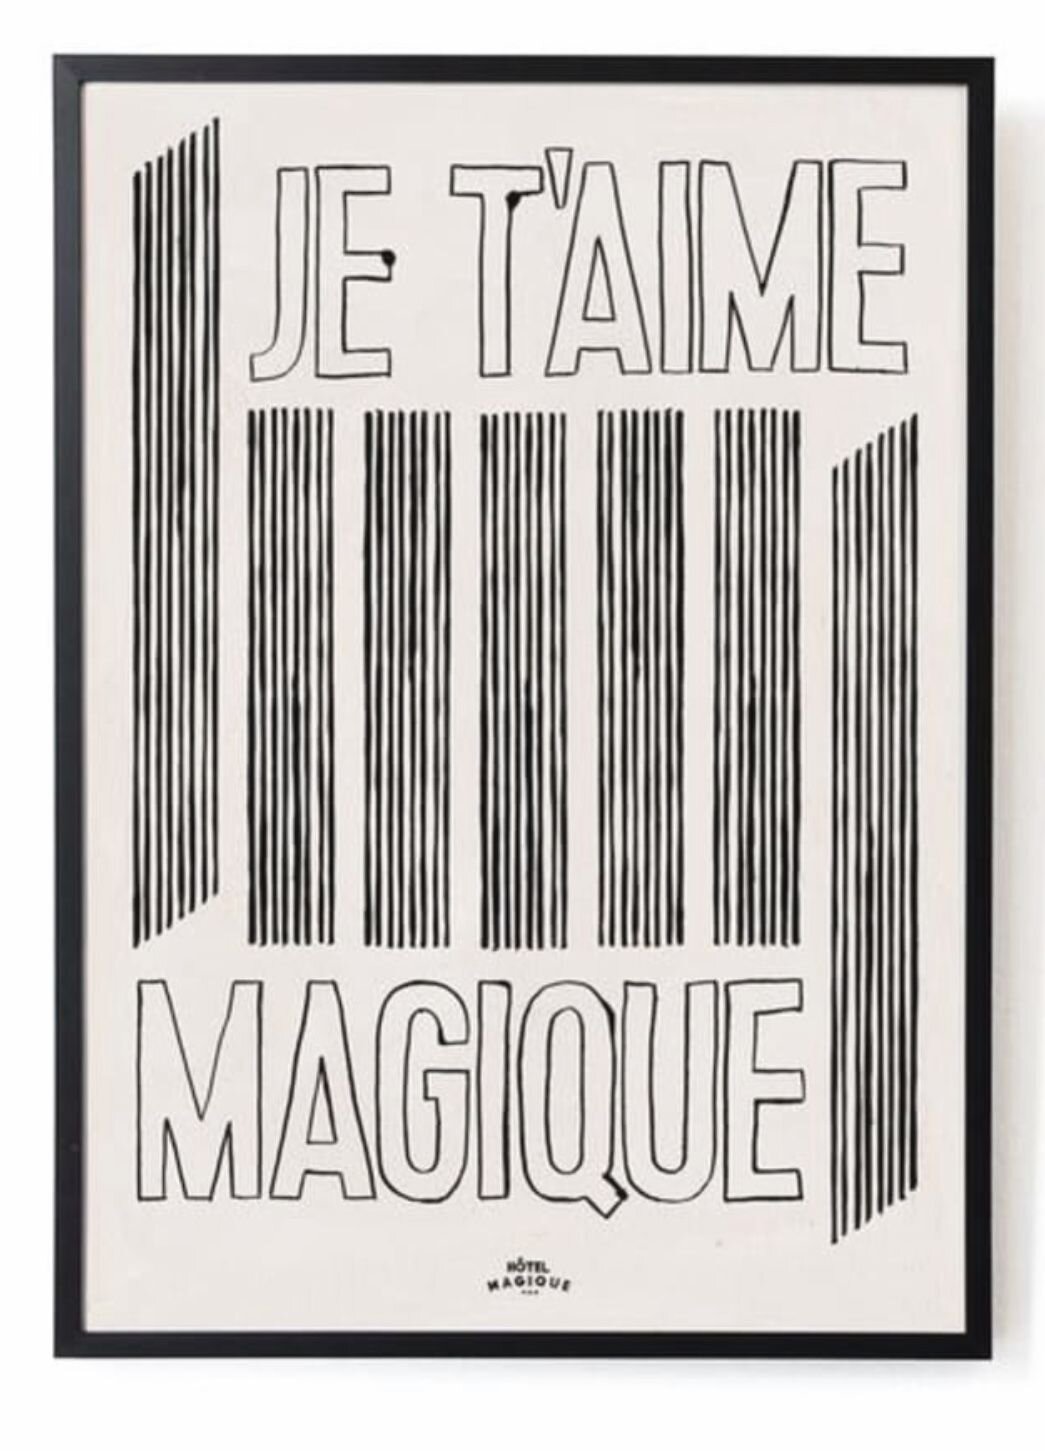 Hotel Magique print.jpg